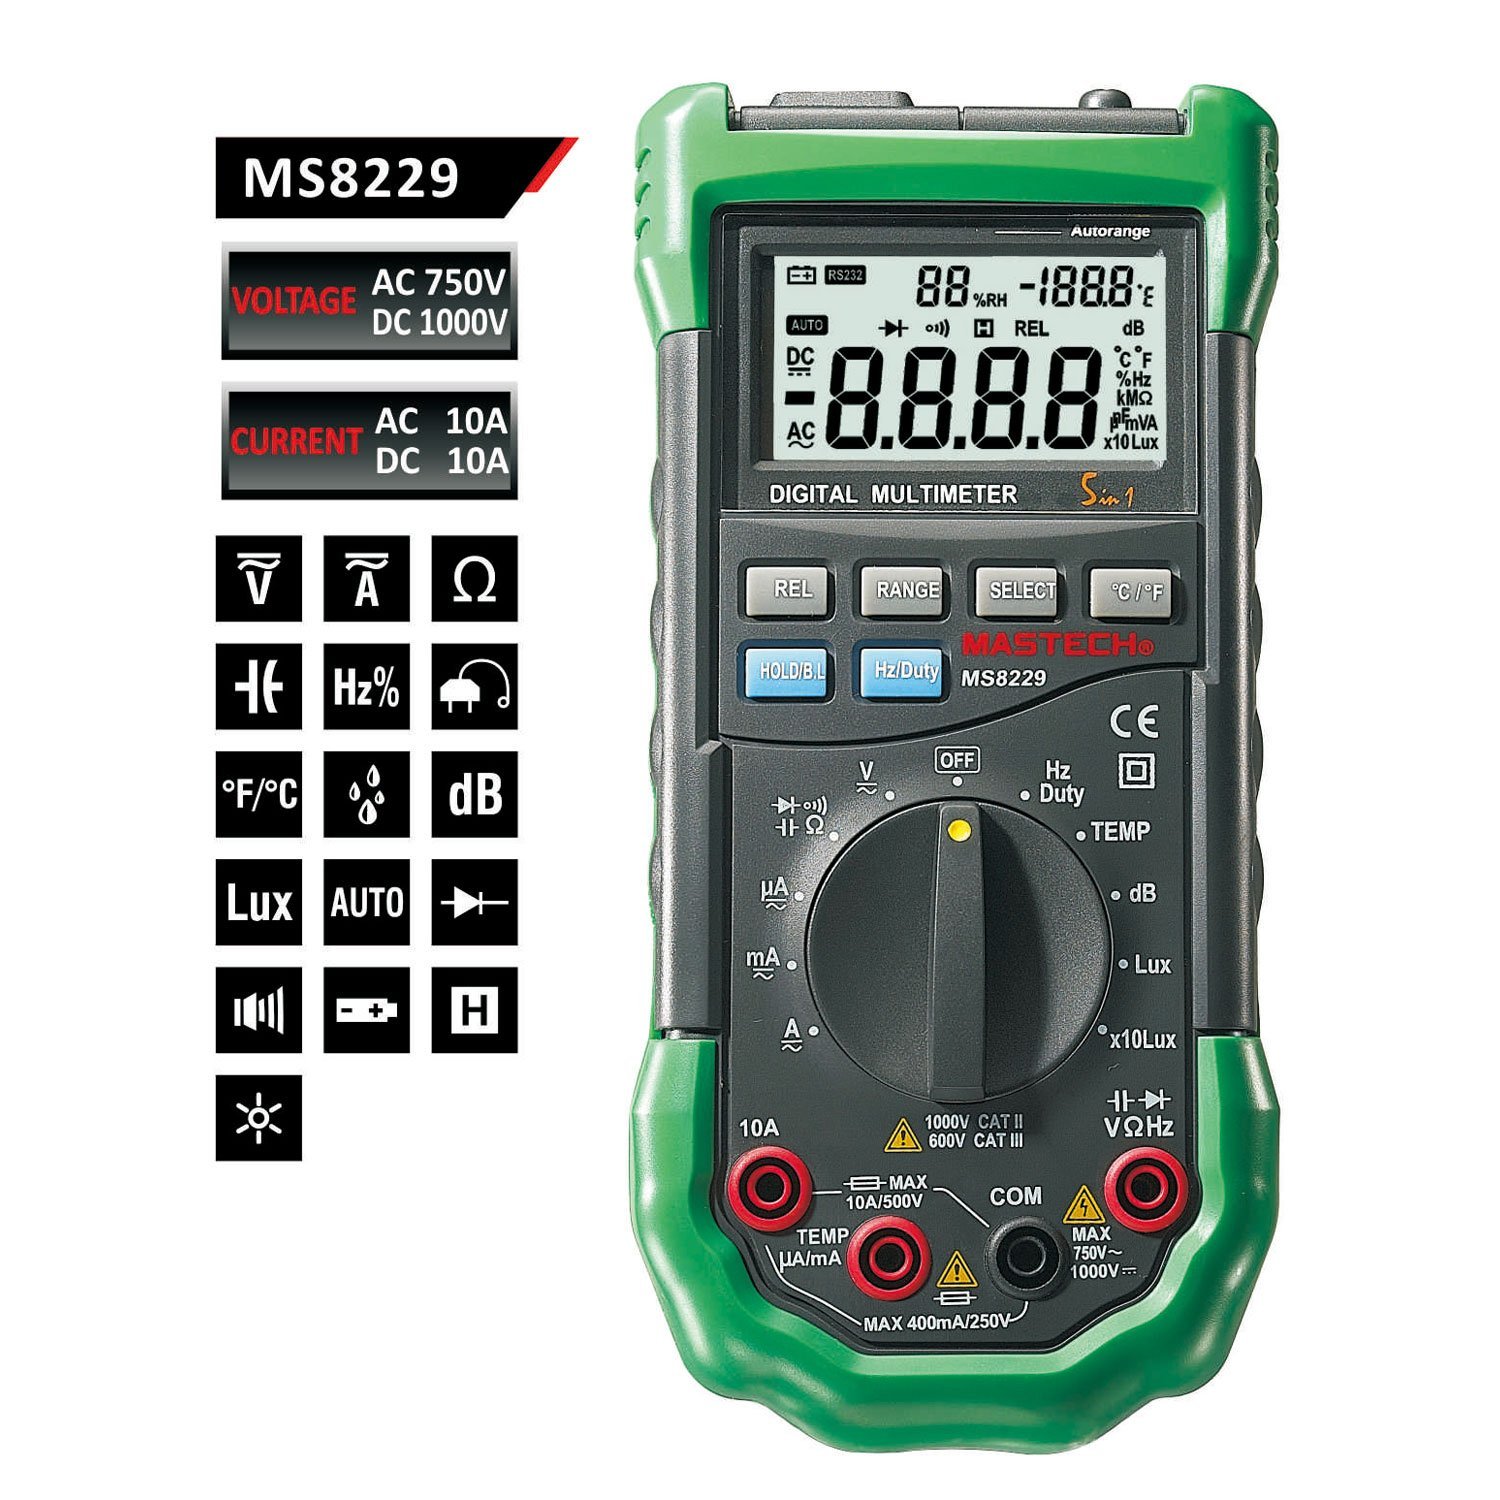 Mastech MS8229 Auto-Range 5-in-1 Multi-functional Digital Multimeter - Functions.